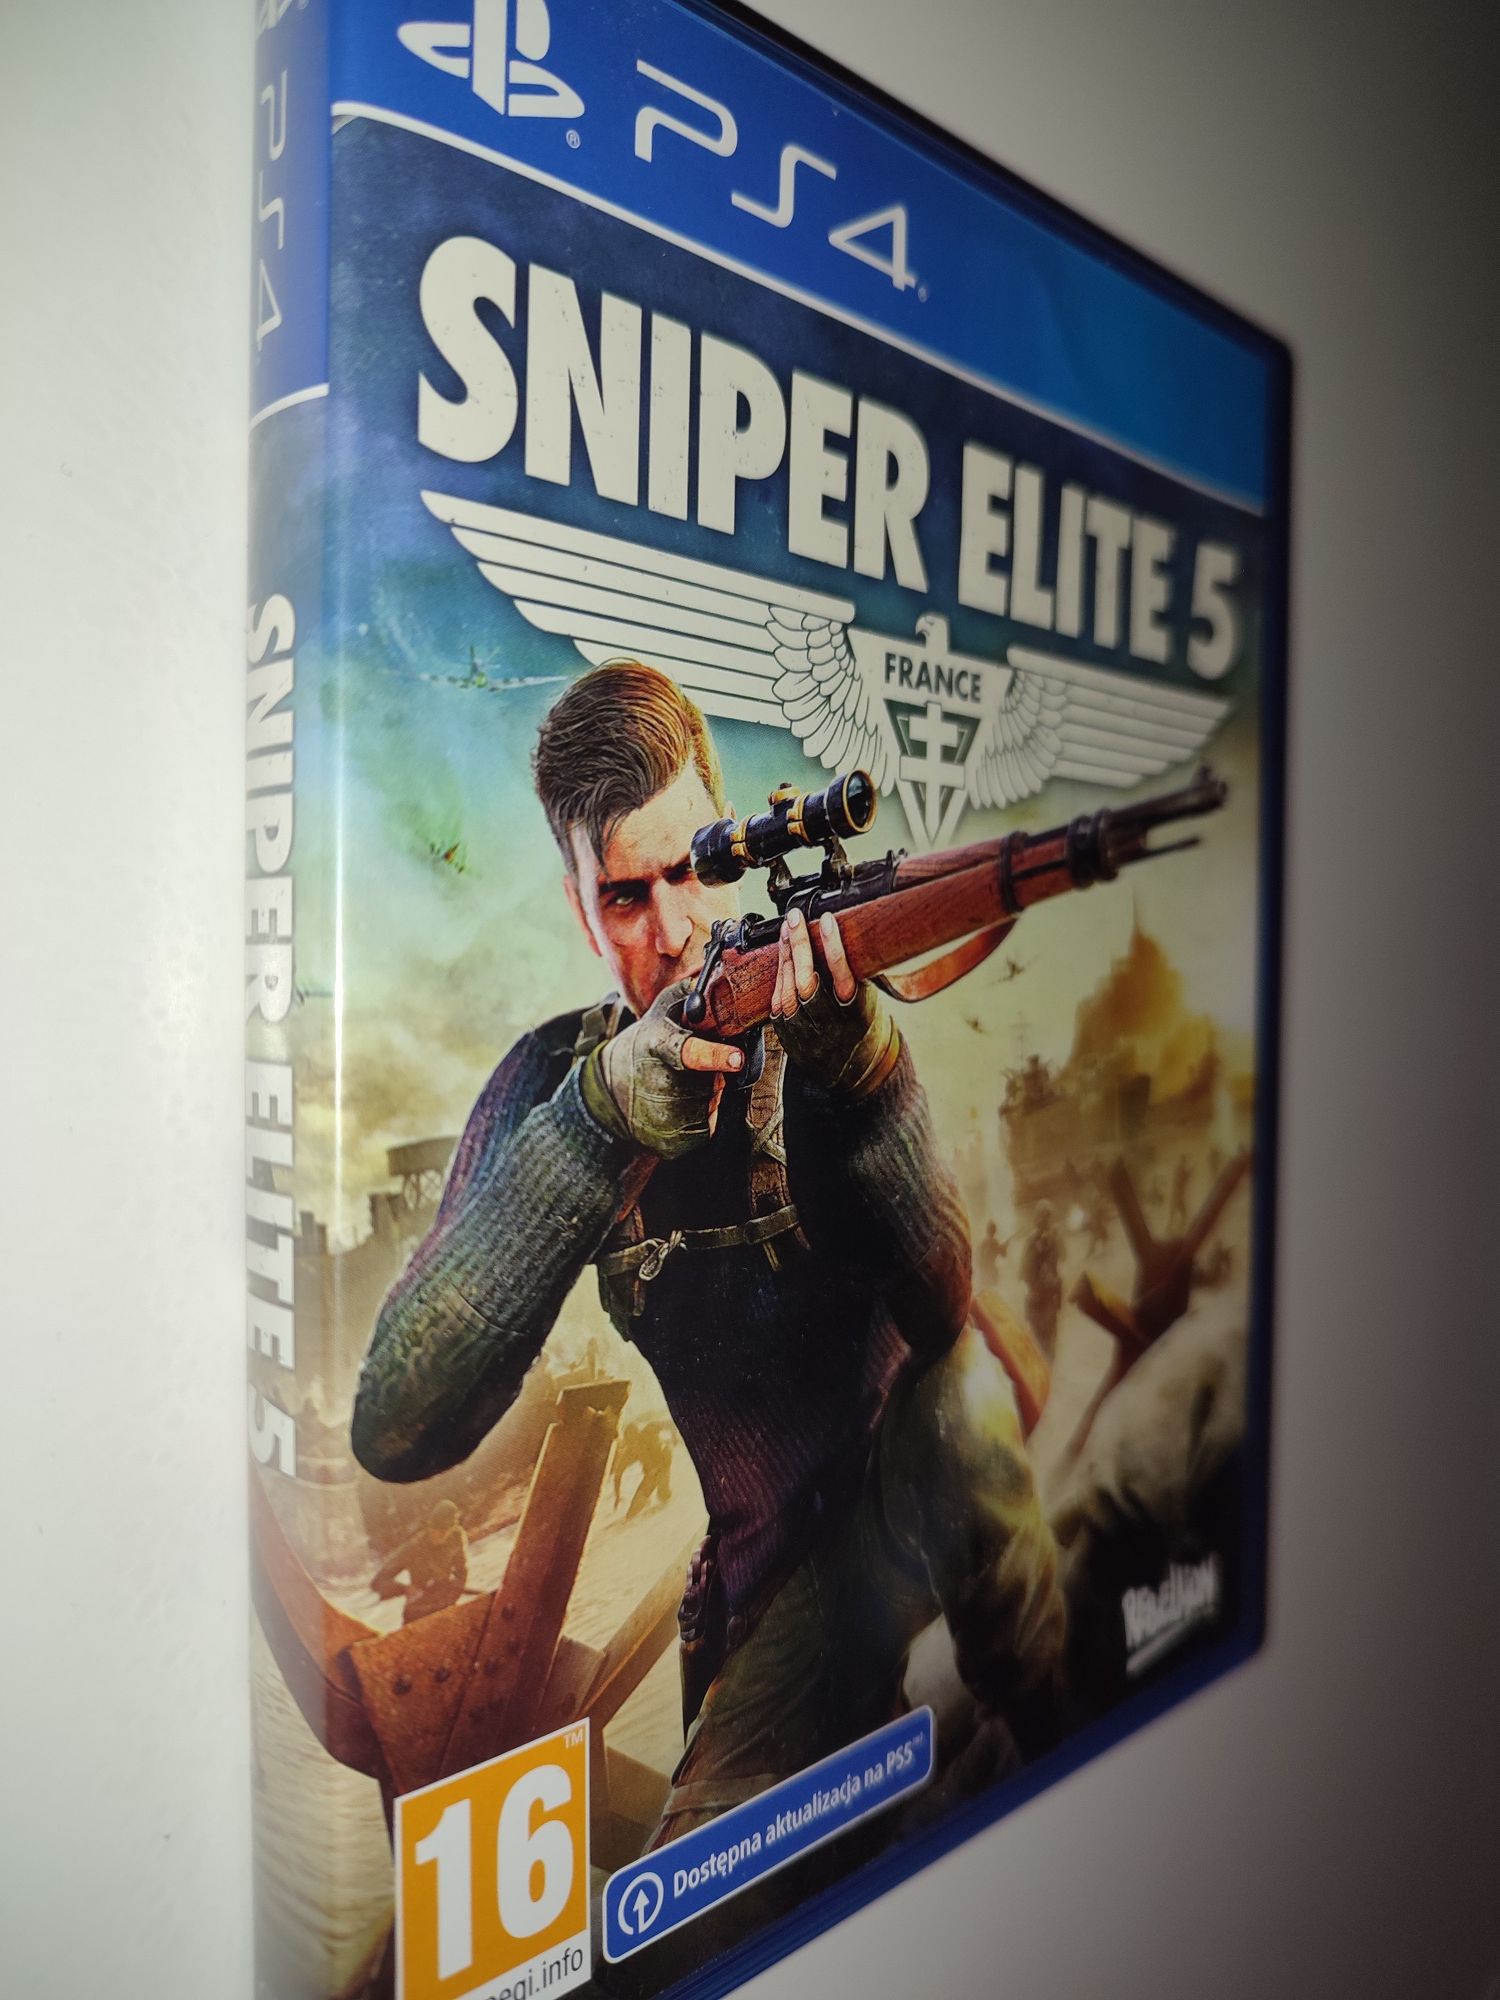 Gra Ps4 Sniper Elite 5 Francja PL gry PlayStation 4 UFC NFS Mafia GT7